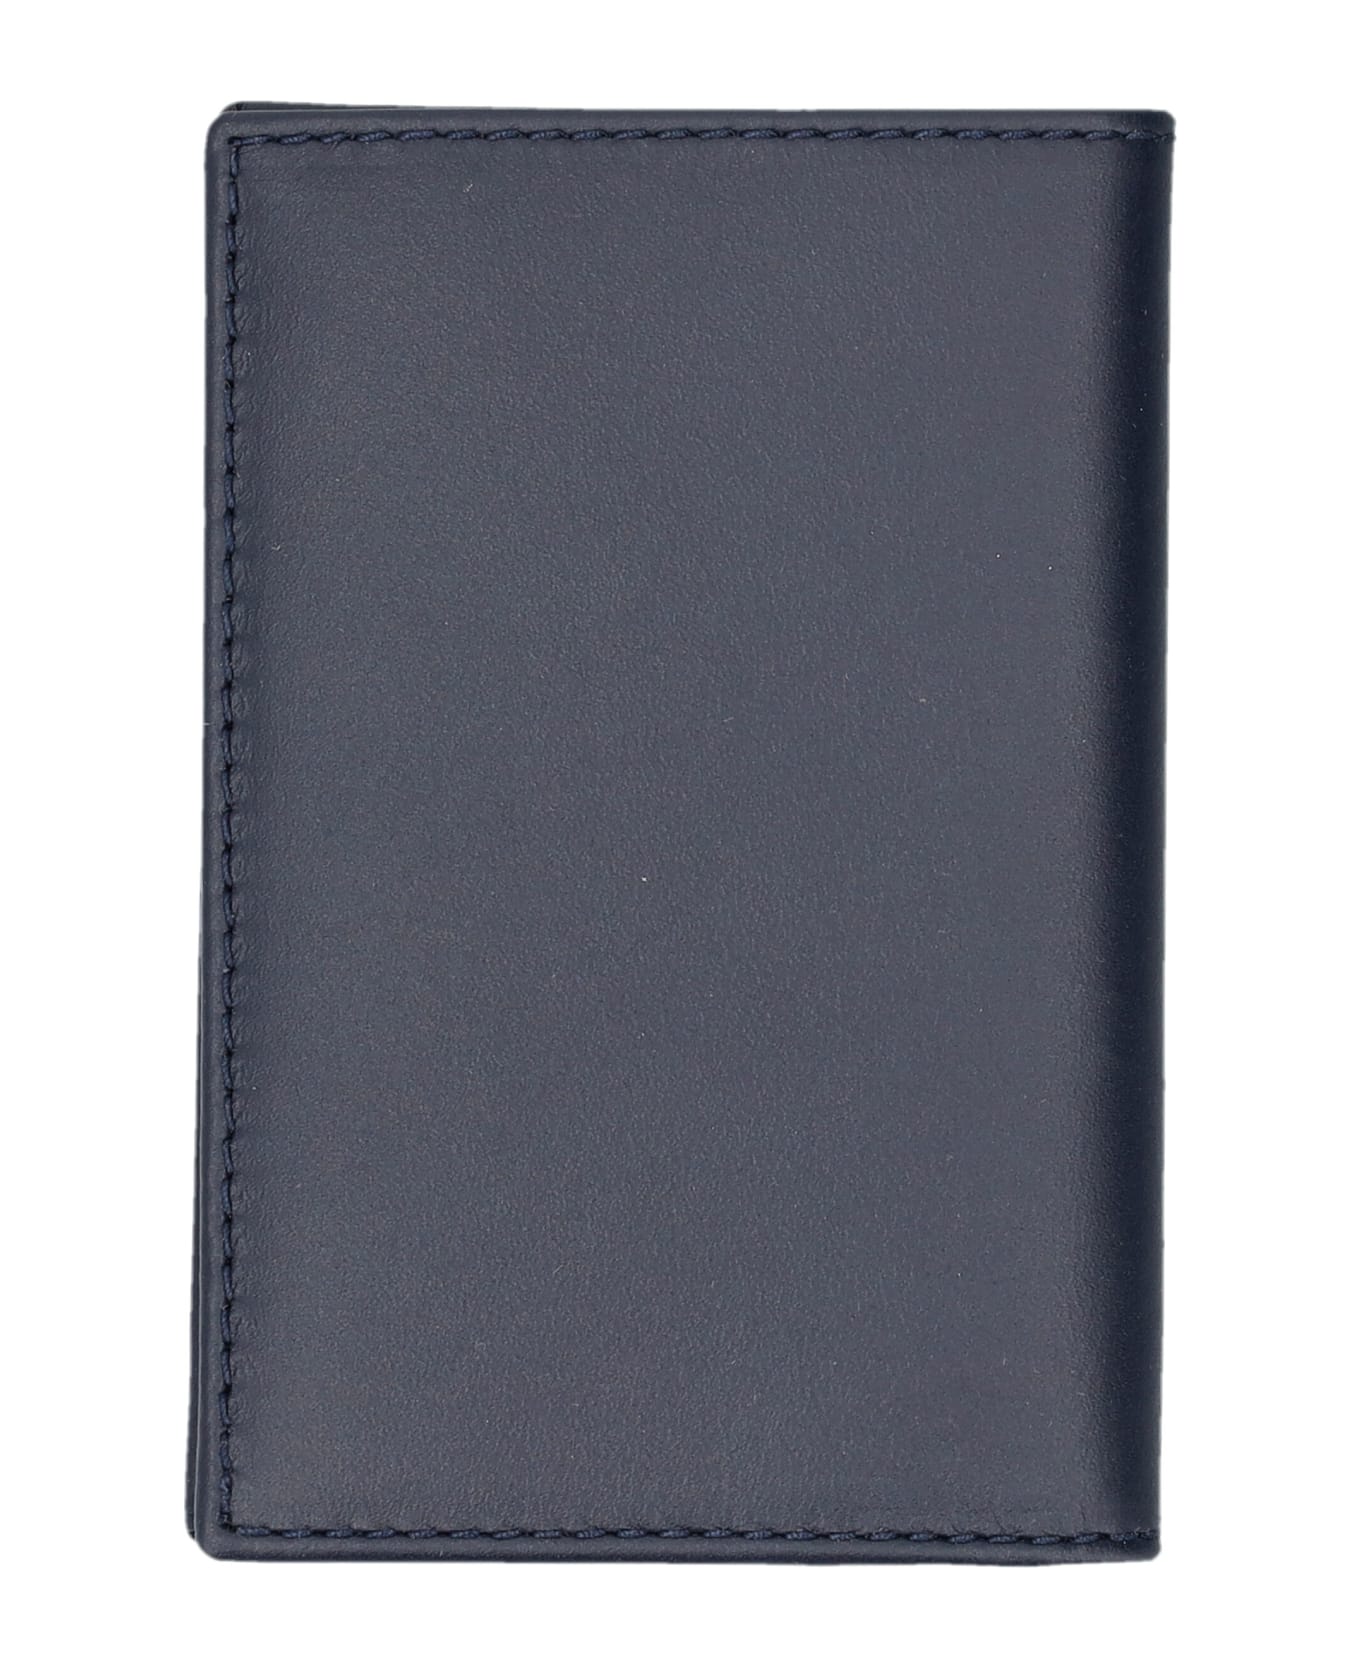 Comme des Garçons Wallet Classic Bifold Wallet - NAVY 財布